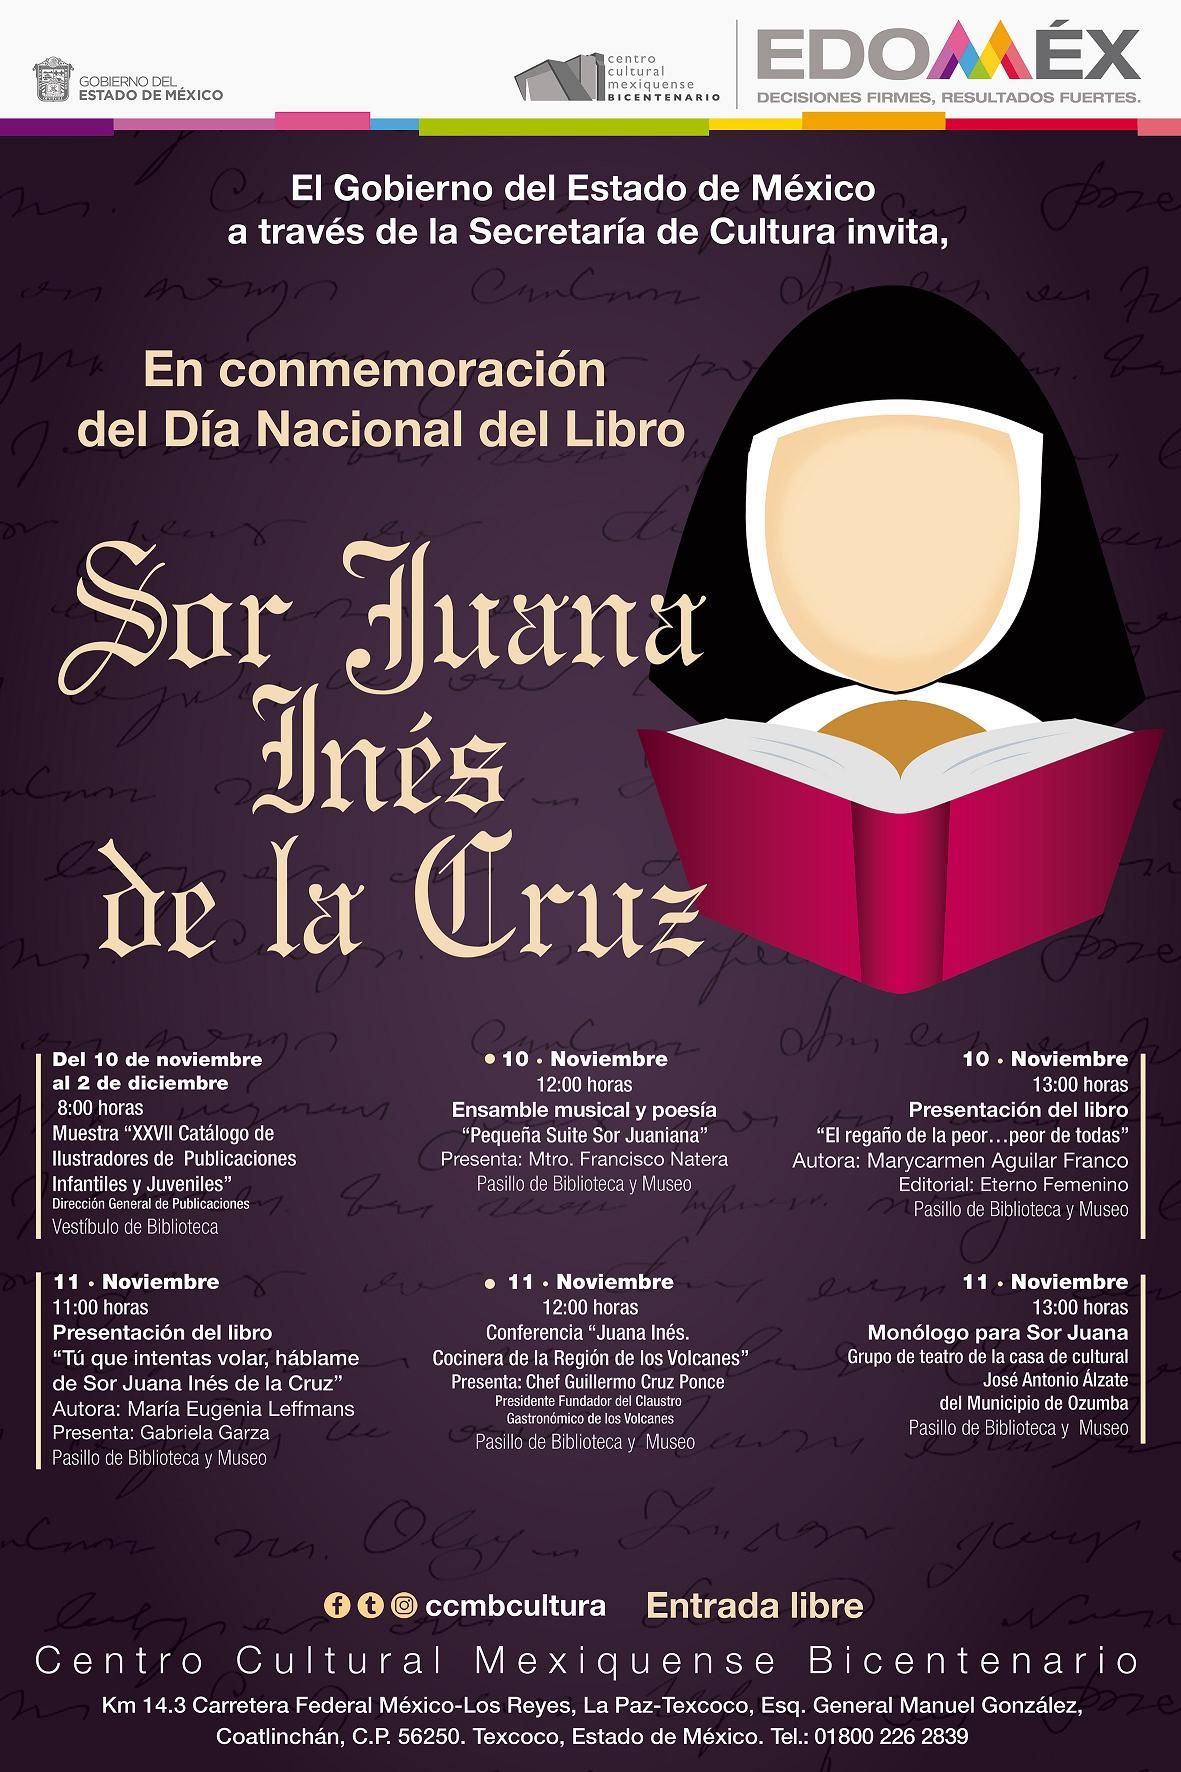 Celebra secretaria de cultura día nacional del lino con jornada dedicada a Sor Juana Inés de la Cruz
 